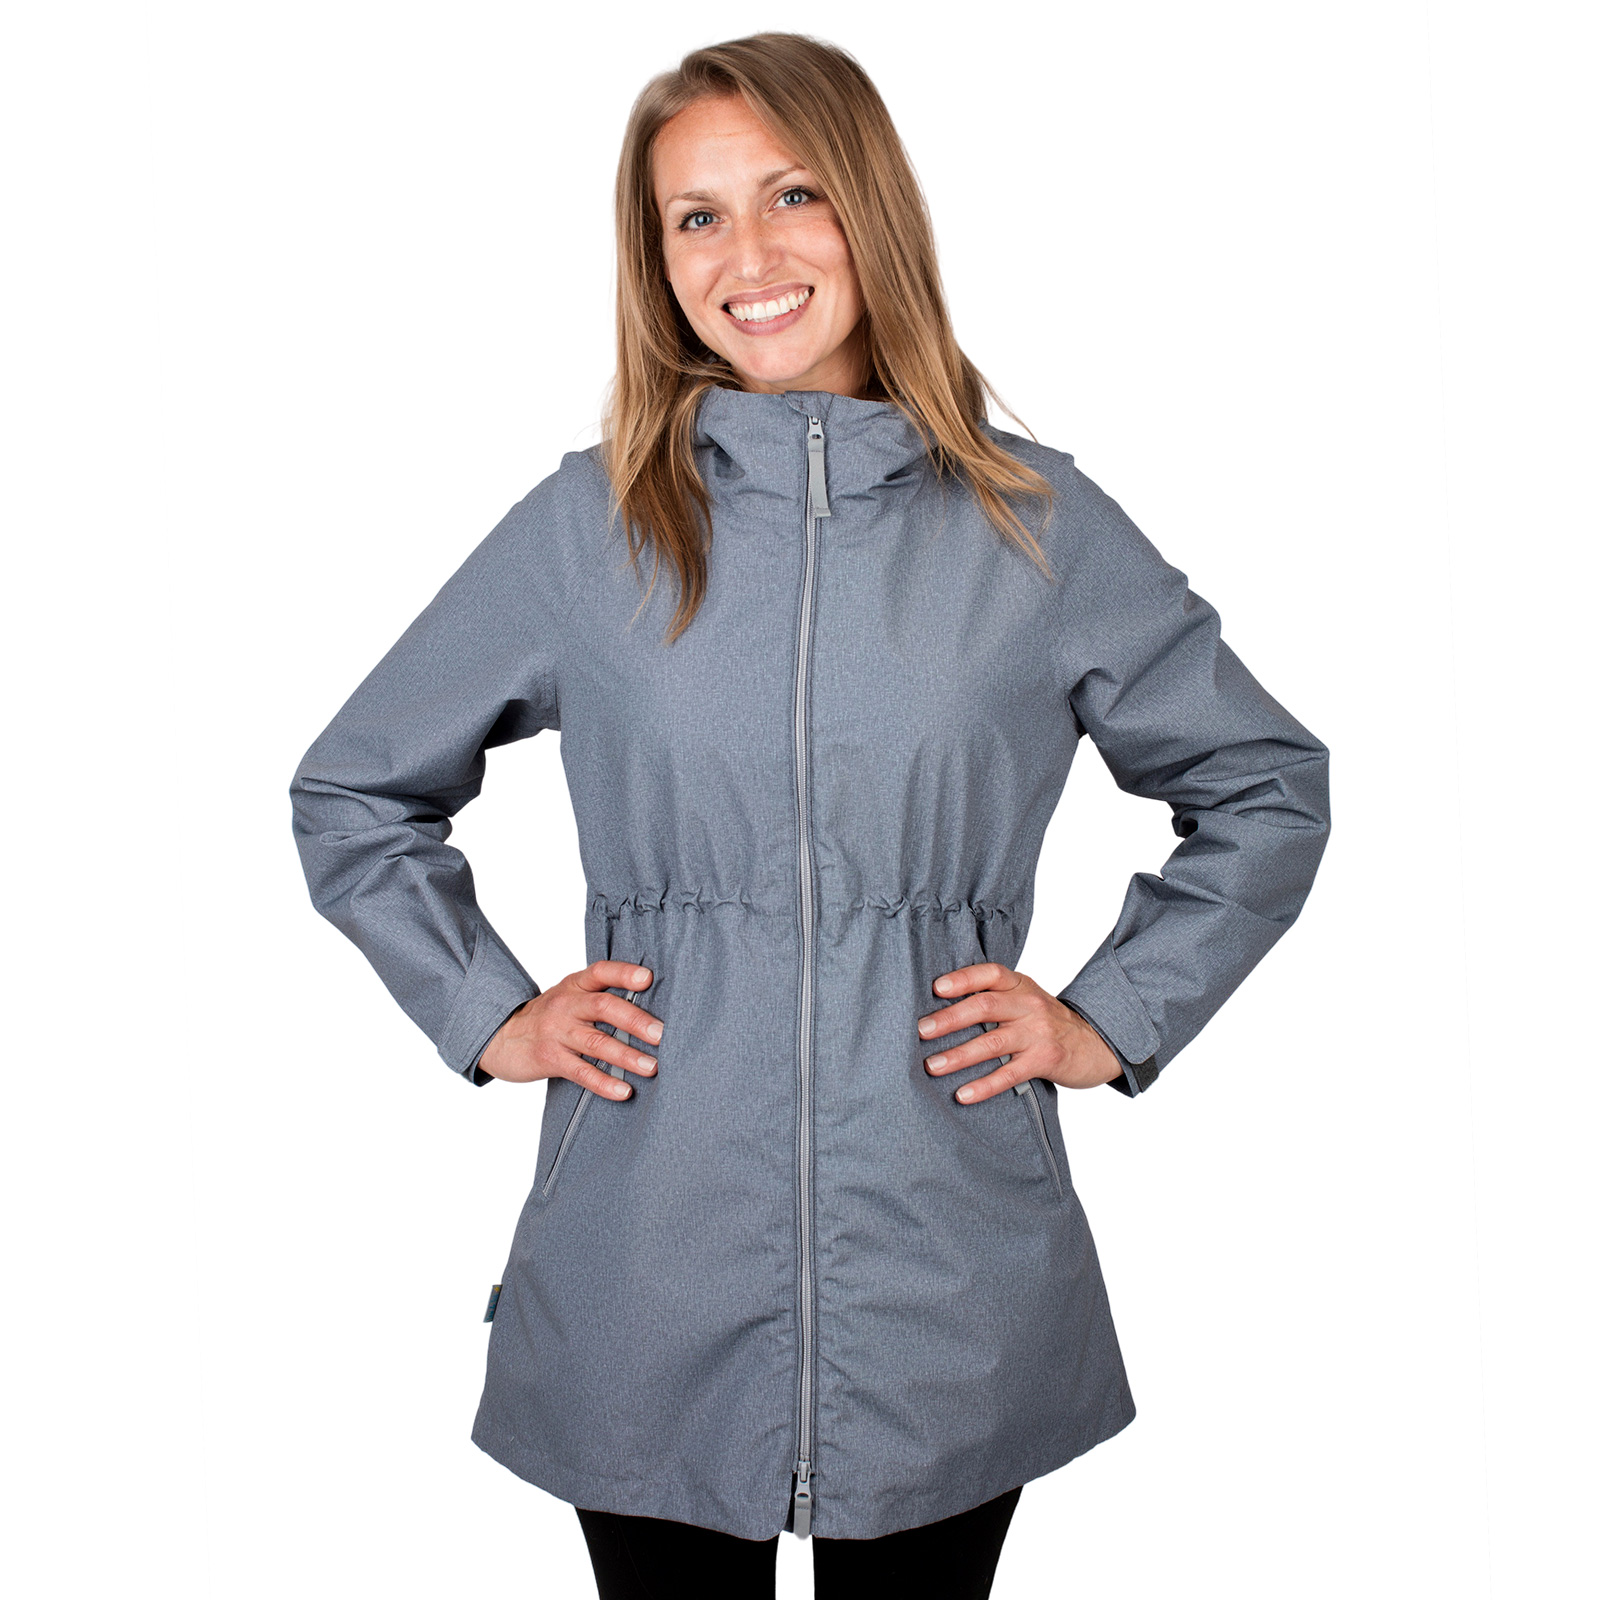 JAN & JUL Waterproof Rain-Coat for Women Thigh-Length Jacket (Heather Grey, Size L) - image 1 of 7